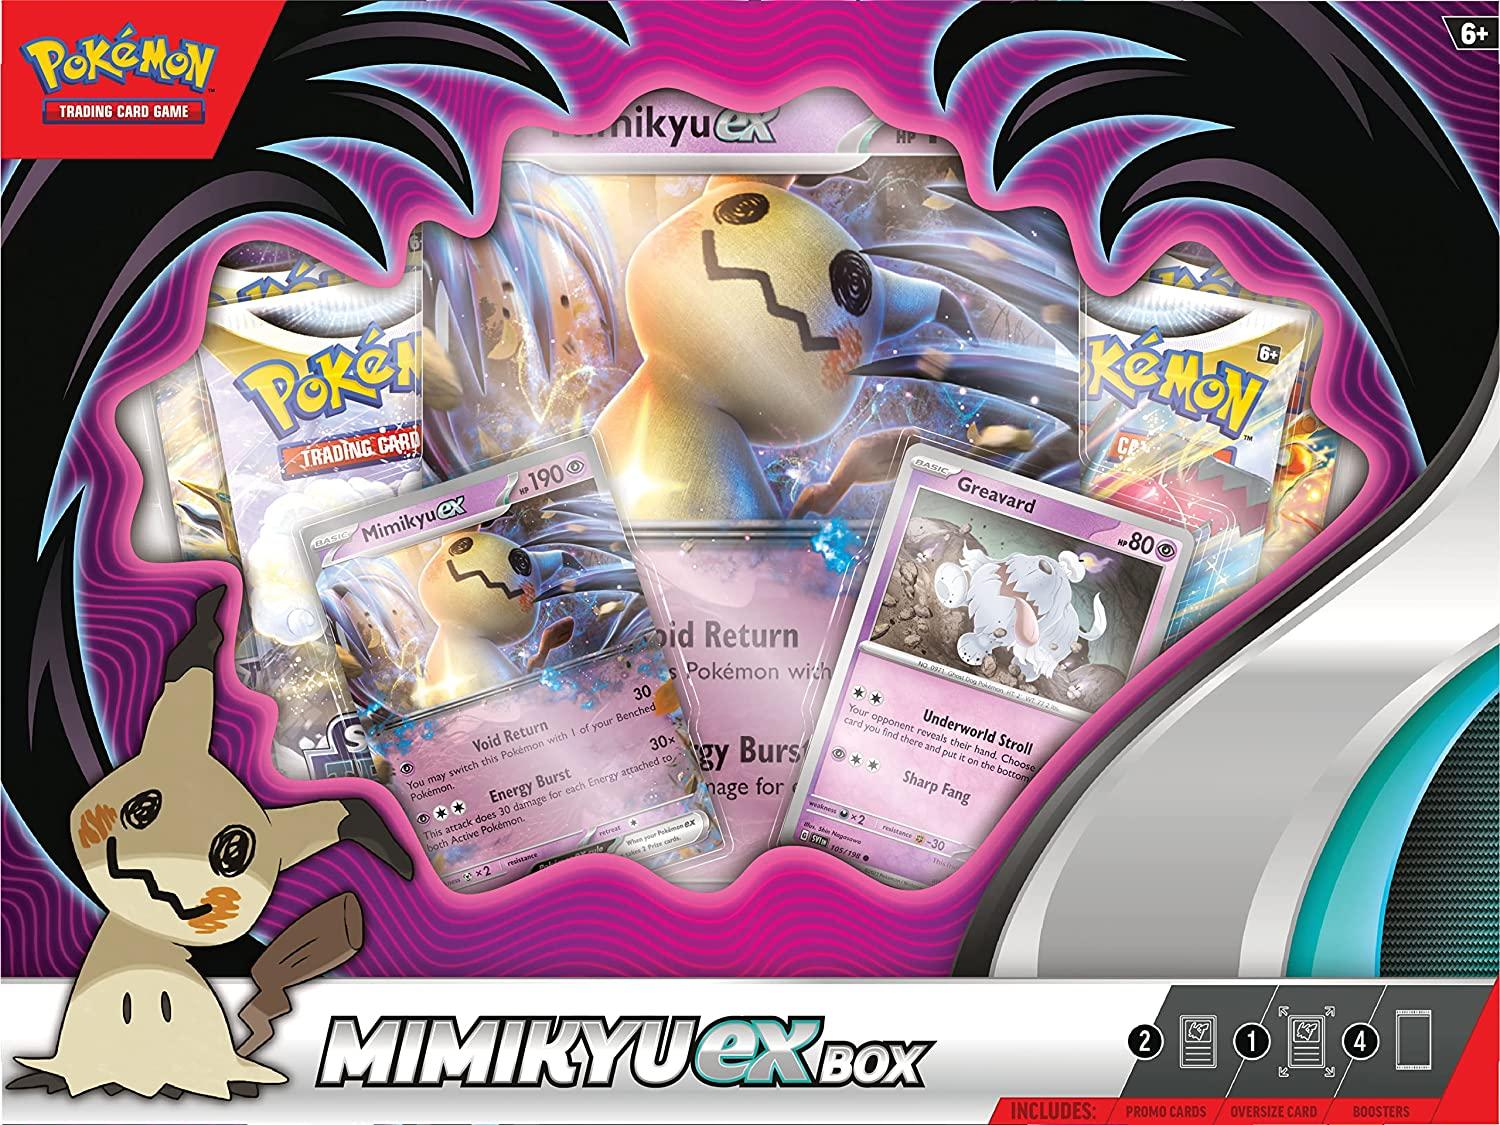 Pokemon Trading Card Game Mimikyu Ex Box for $16.49